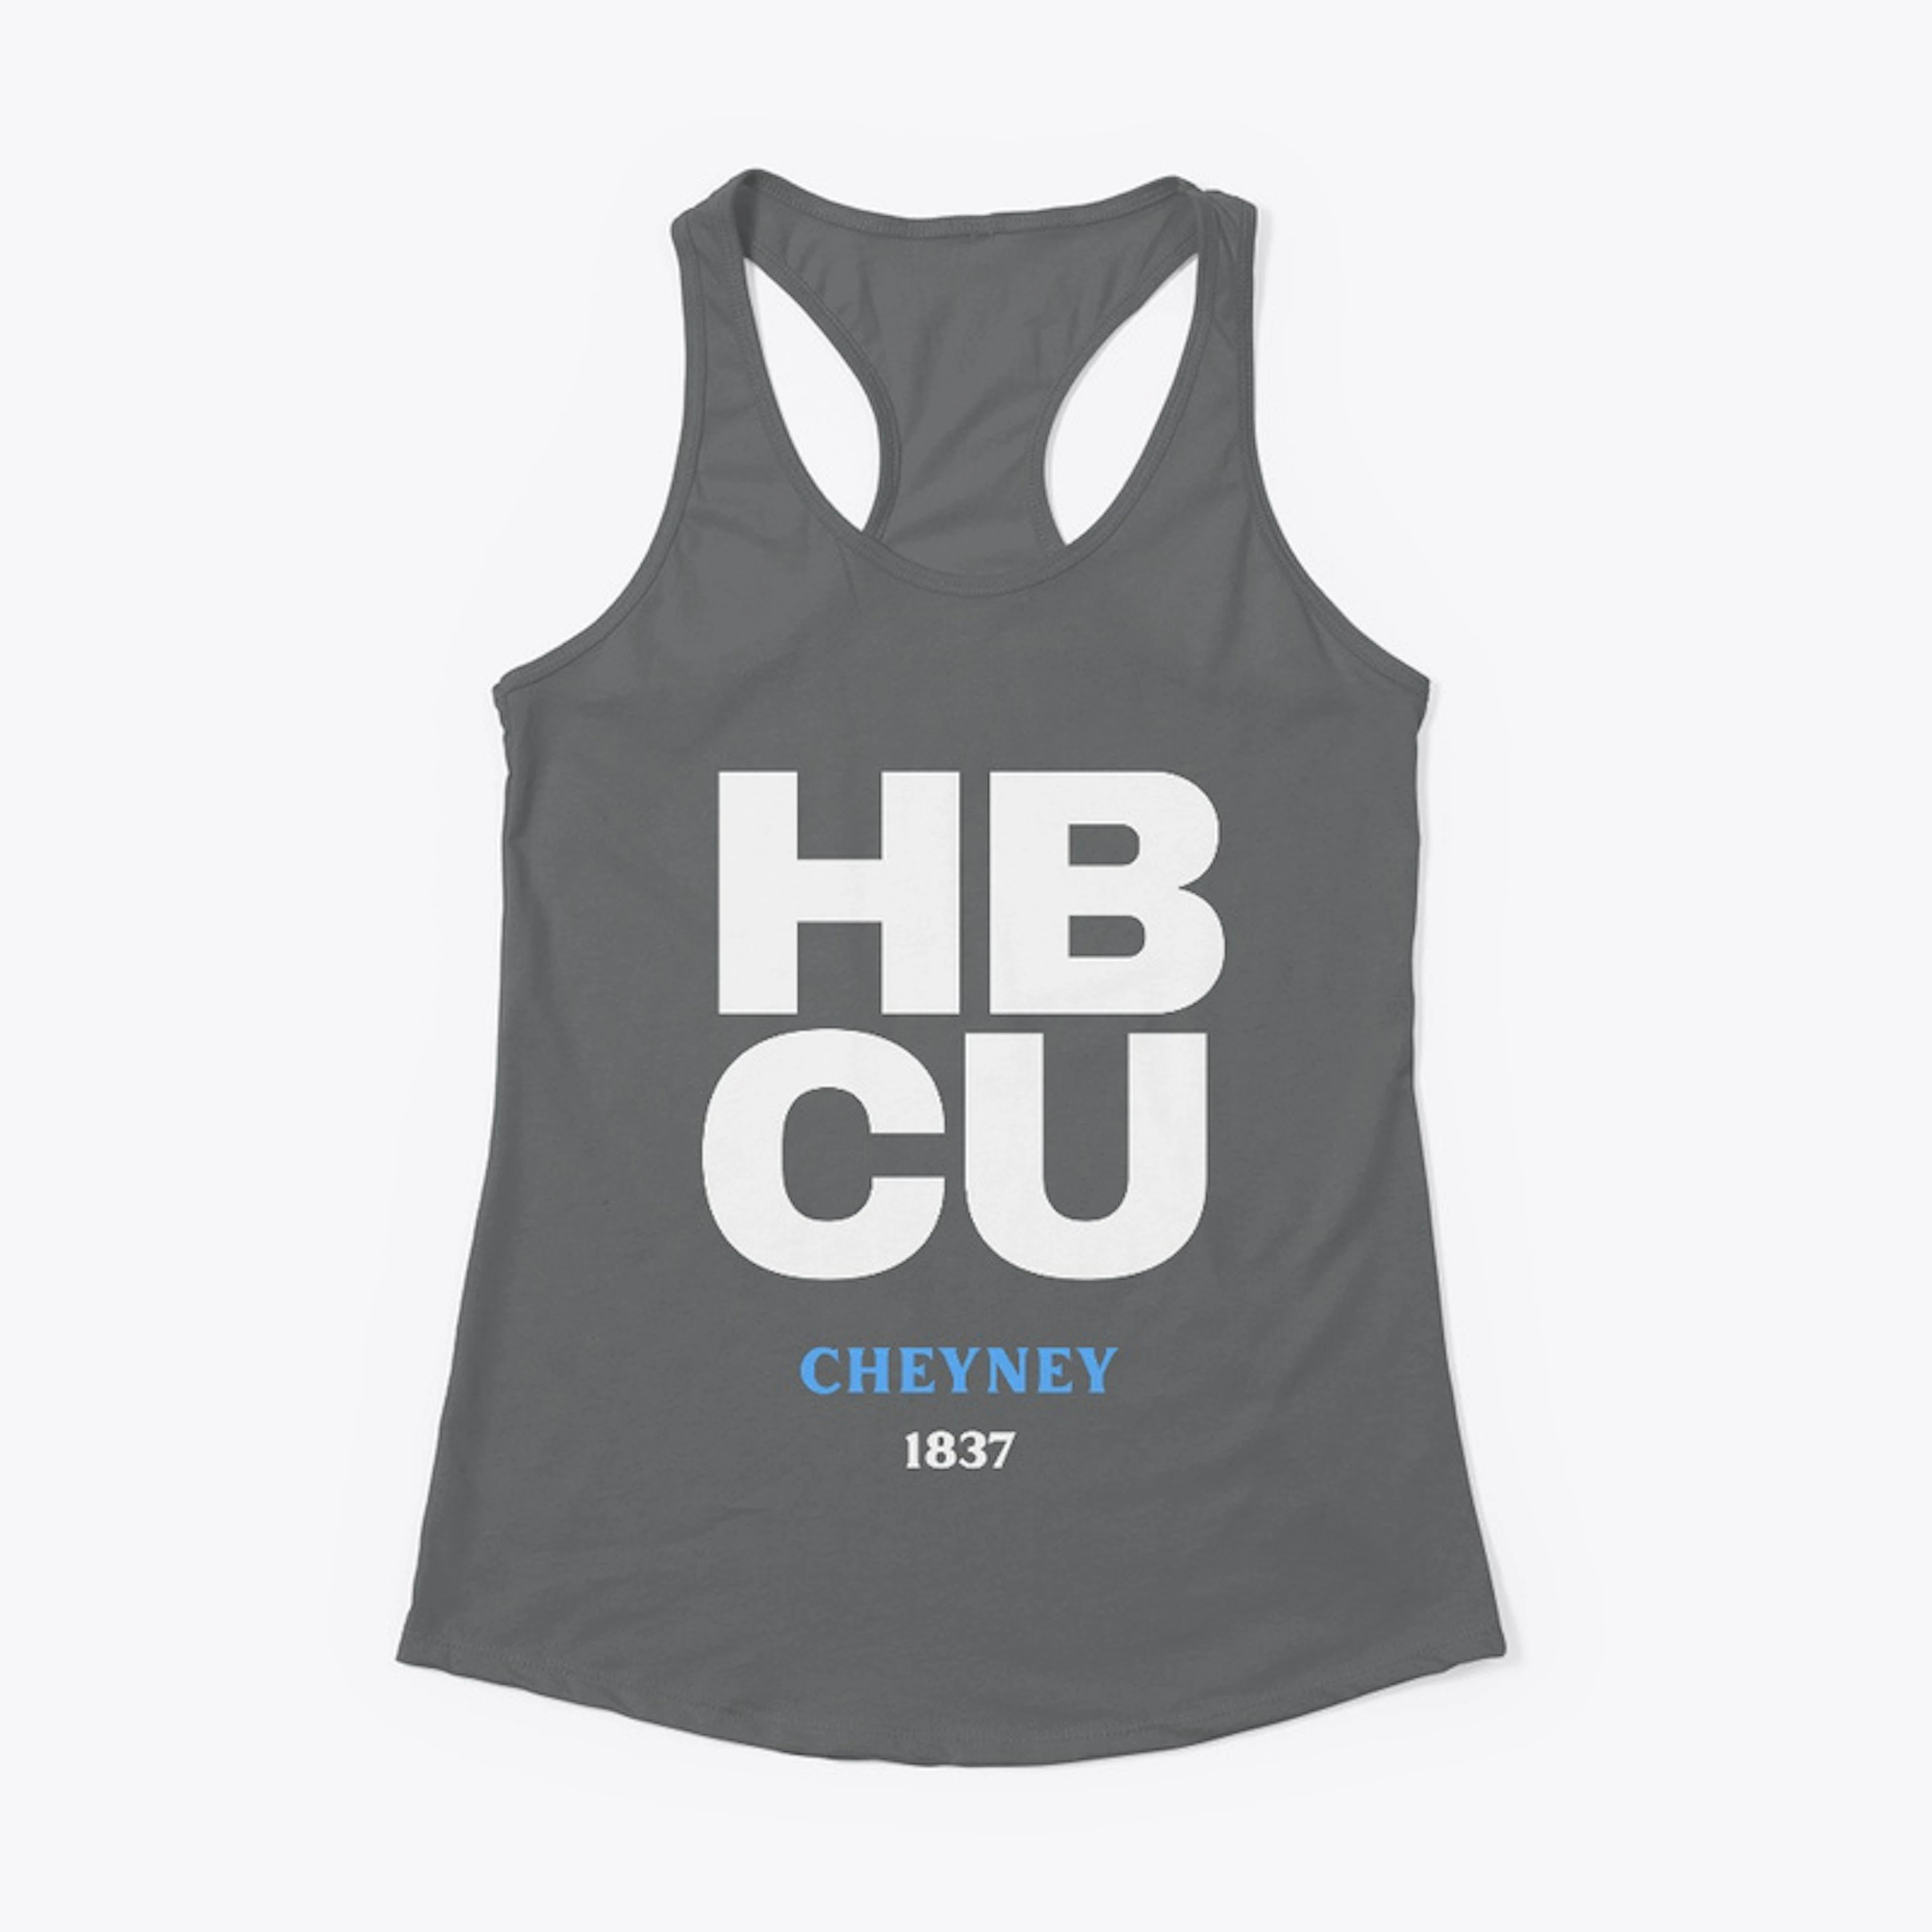 HBCU: Cheyney University of Pennsylvania